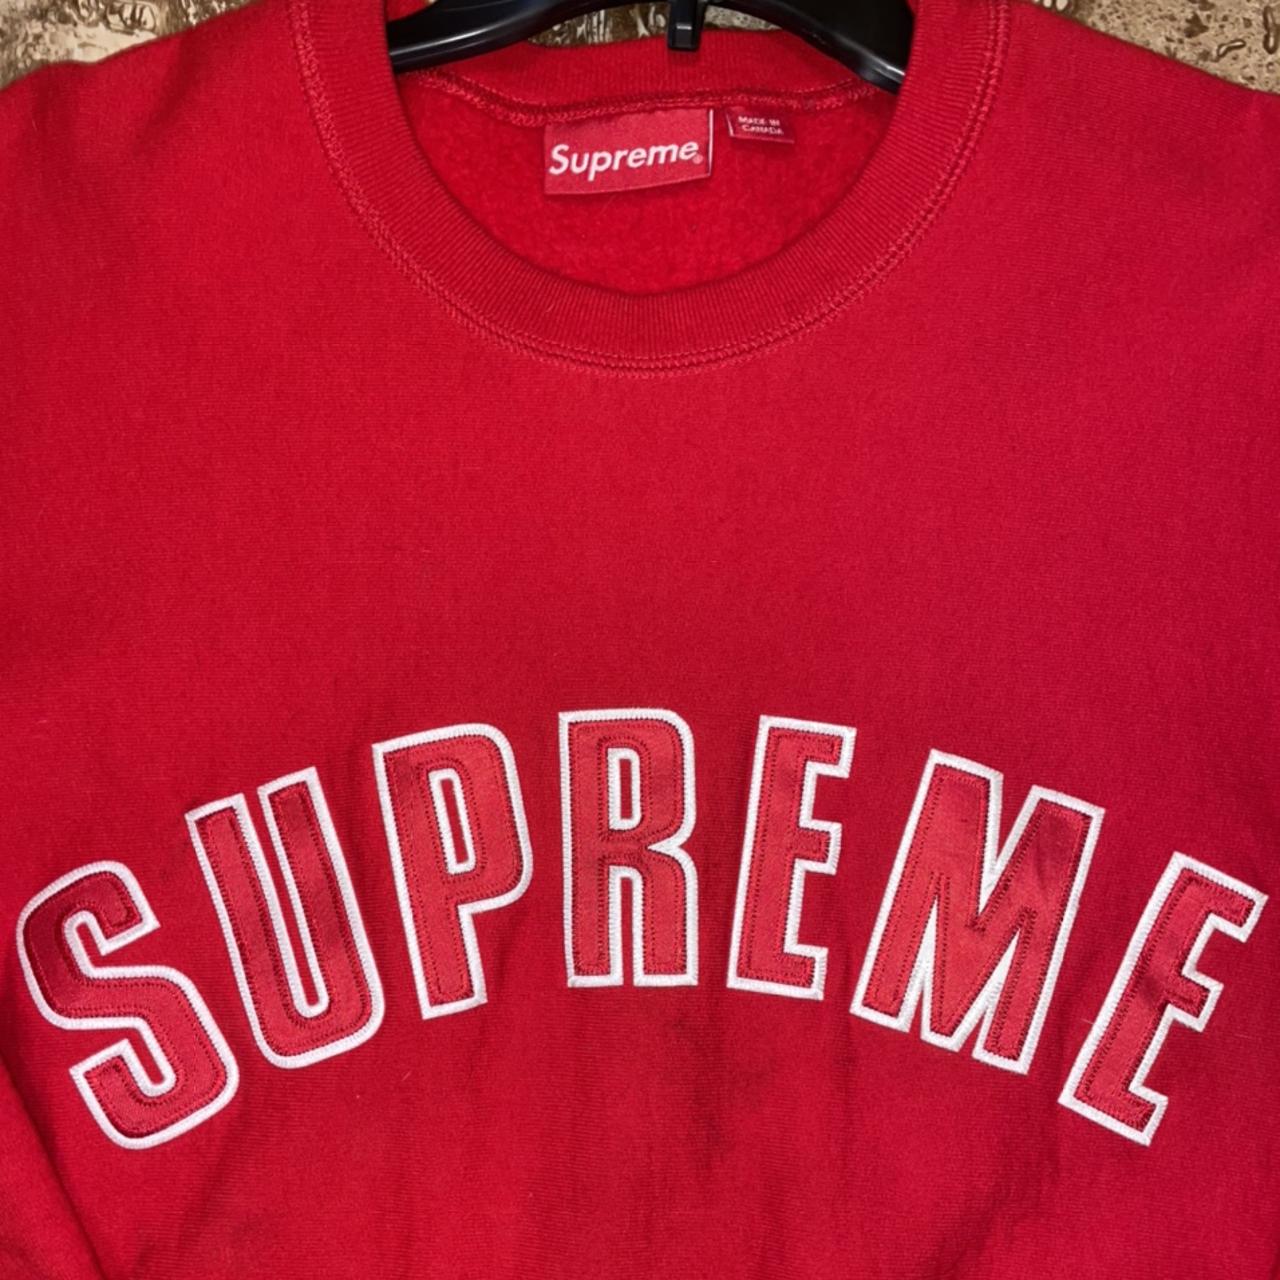 fw15 supreme arc logo crewneck sweatshirt, red